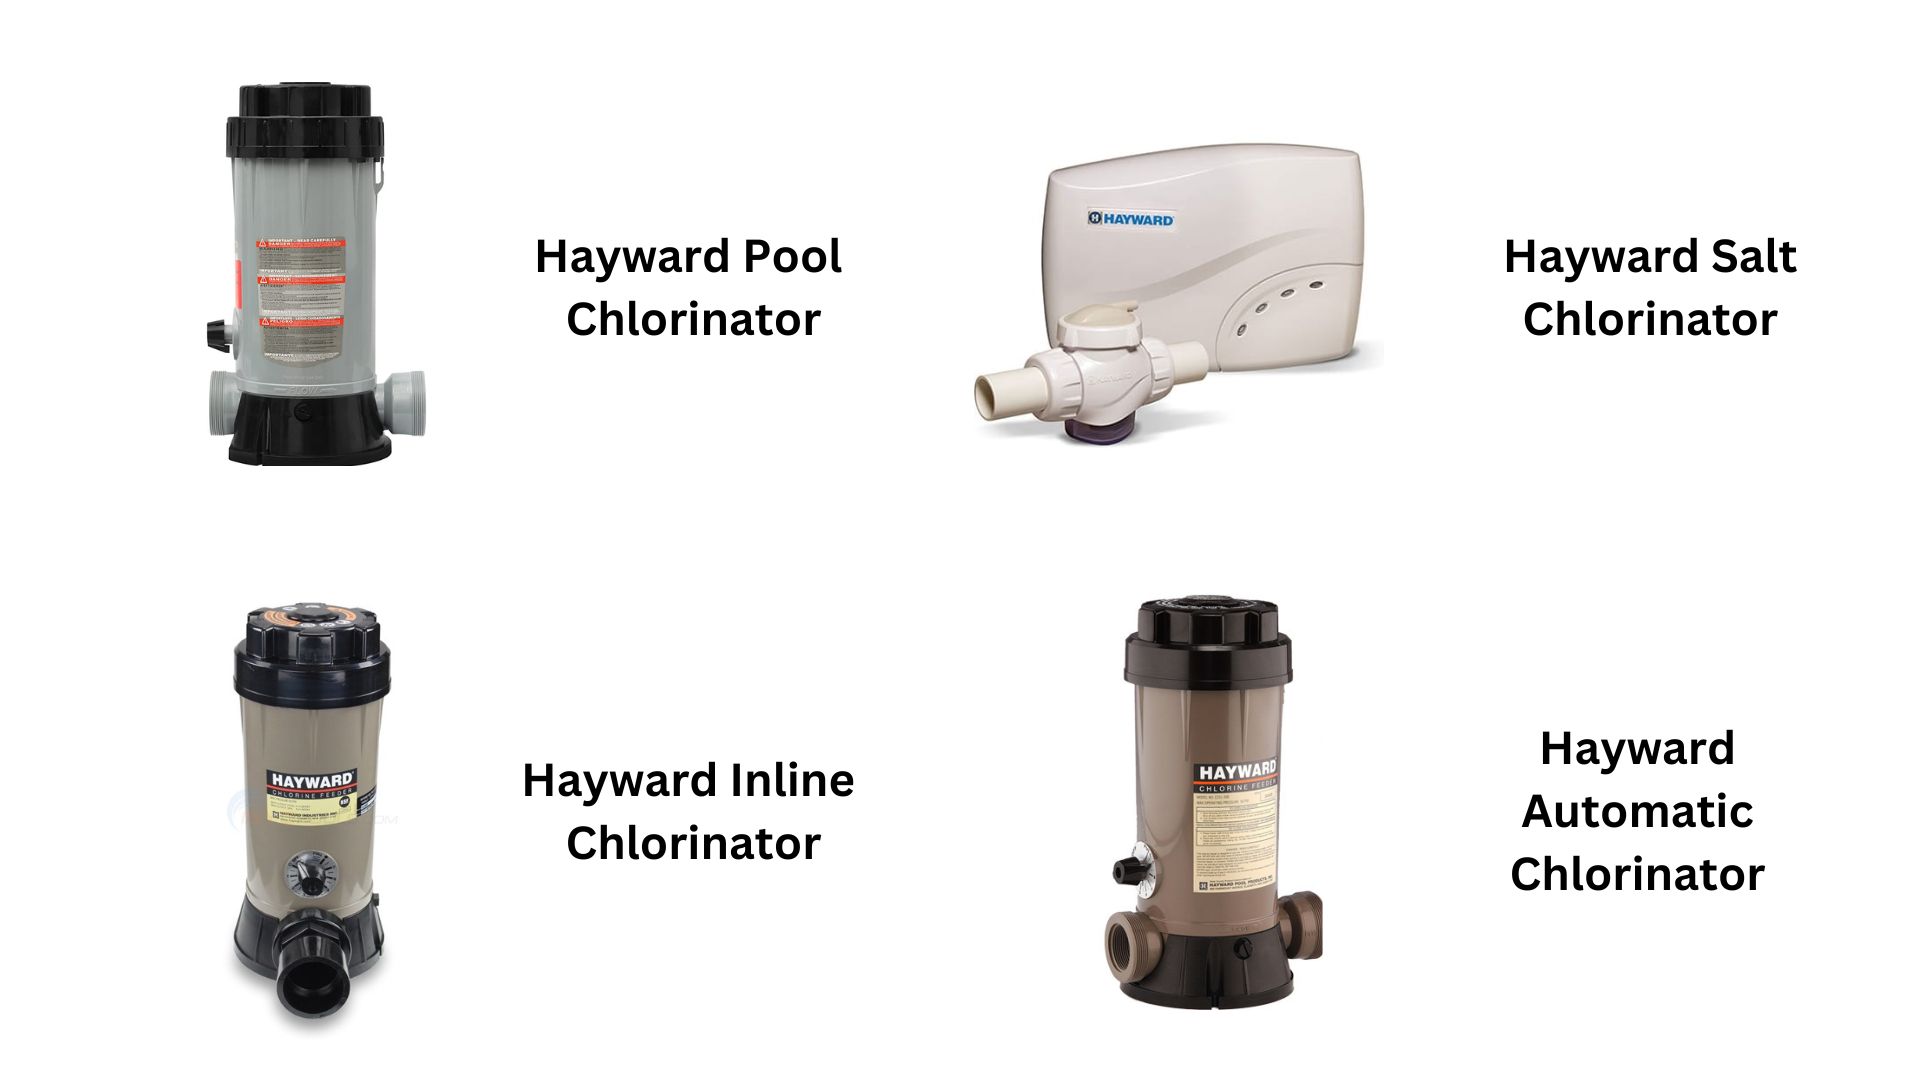 Types of Hayward Chlorinators